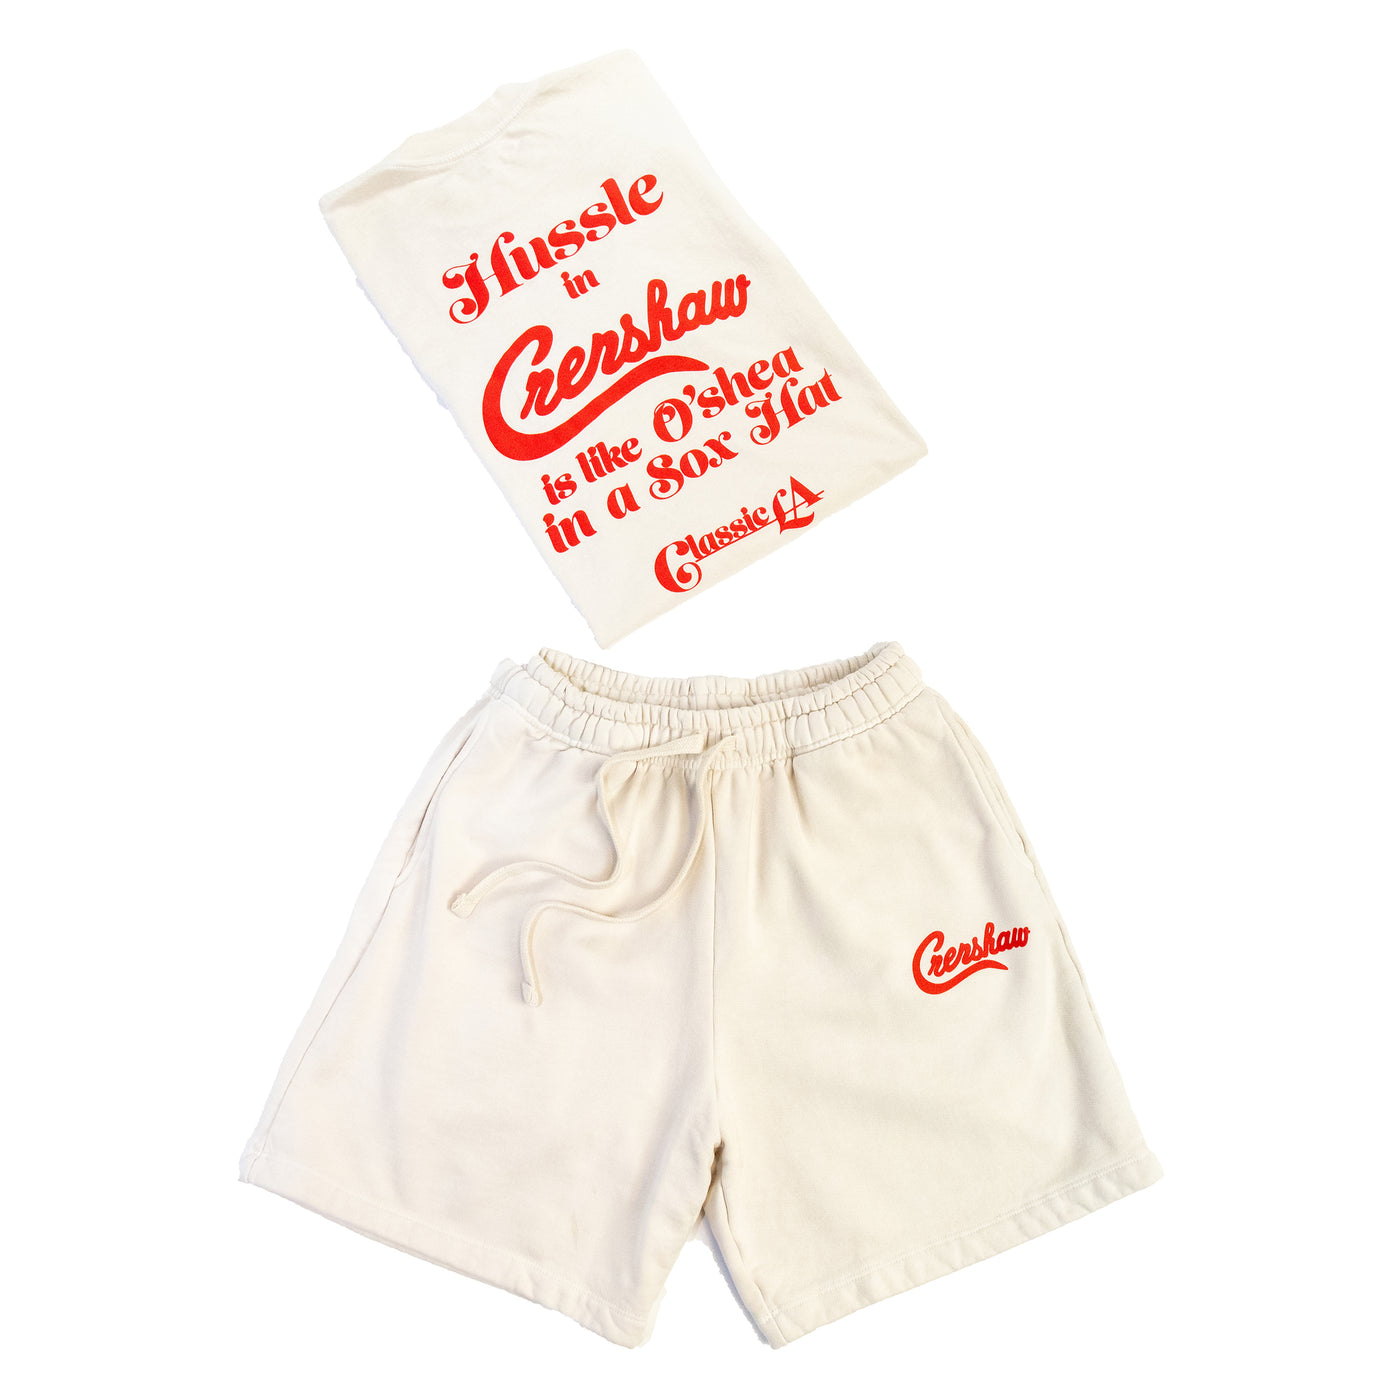 Crenshaw Classic LA Shorts - Bone/Red - Matching Set